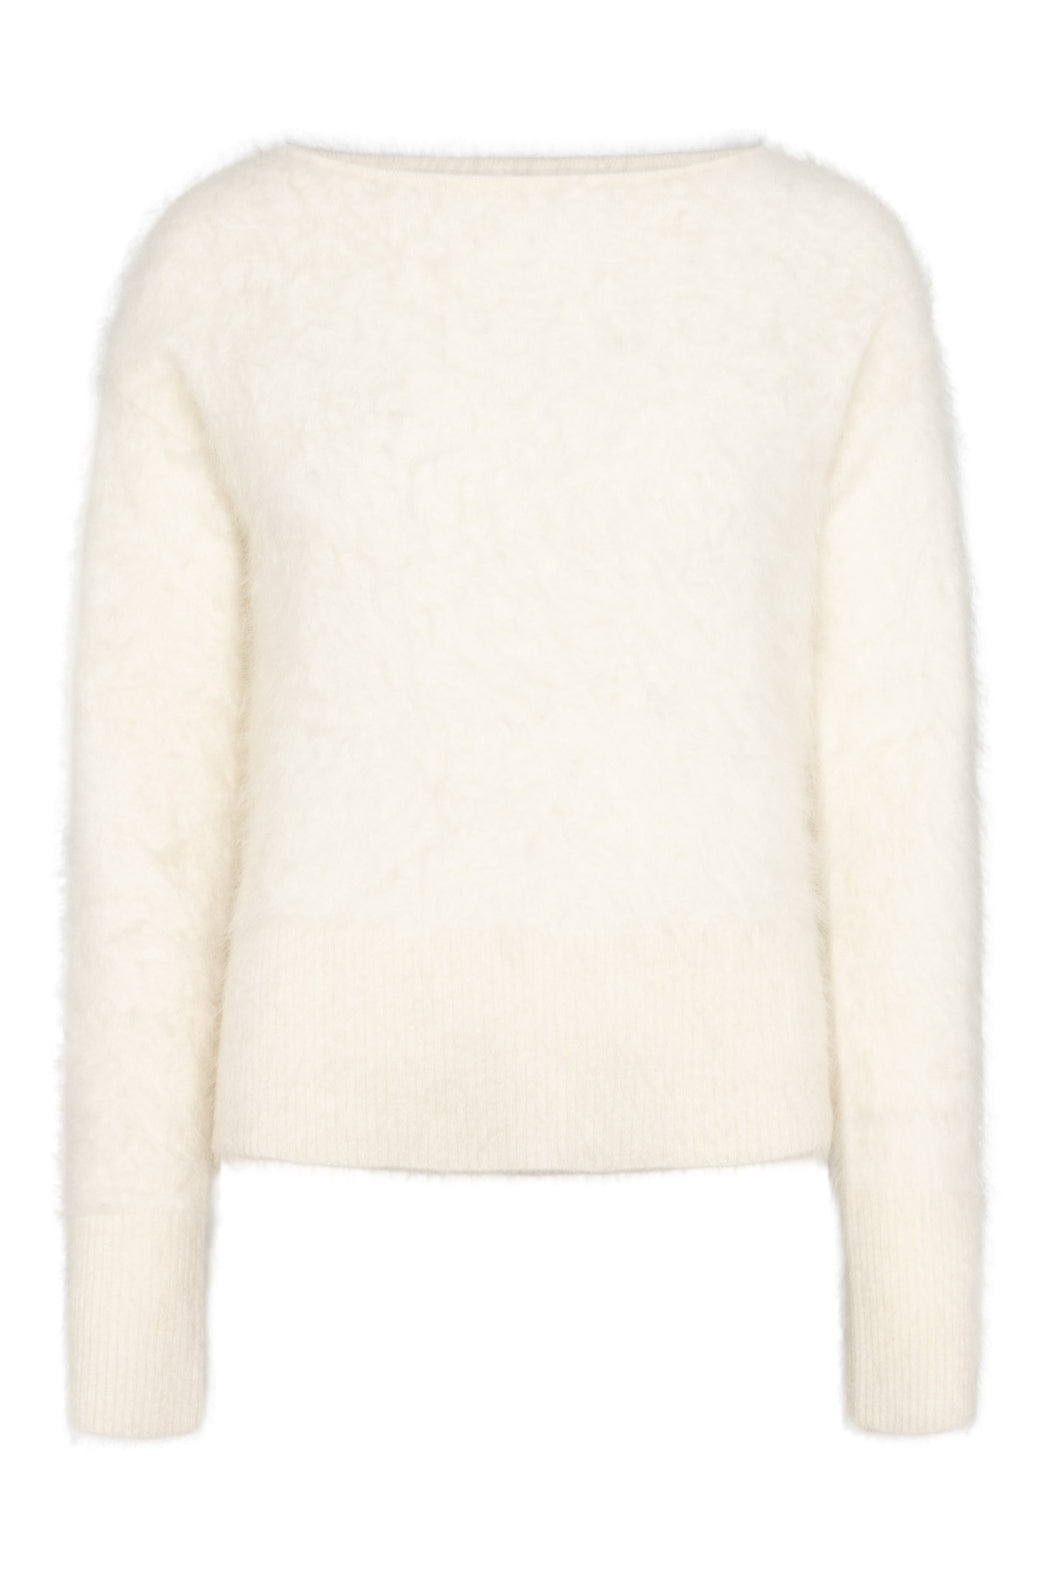 Envelope1976 Cloud knit - Cashmere Sweater Cream